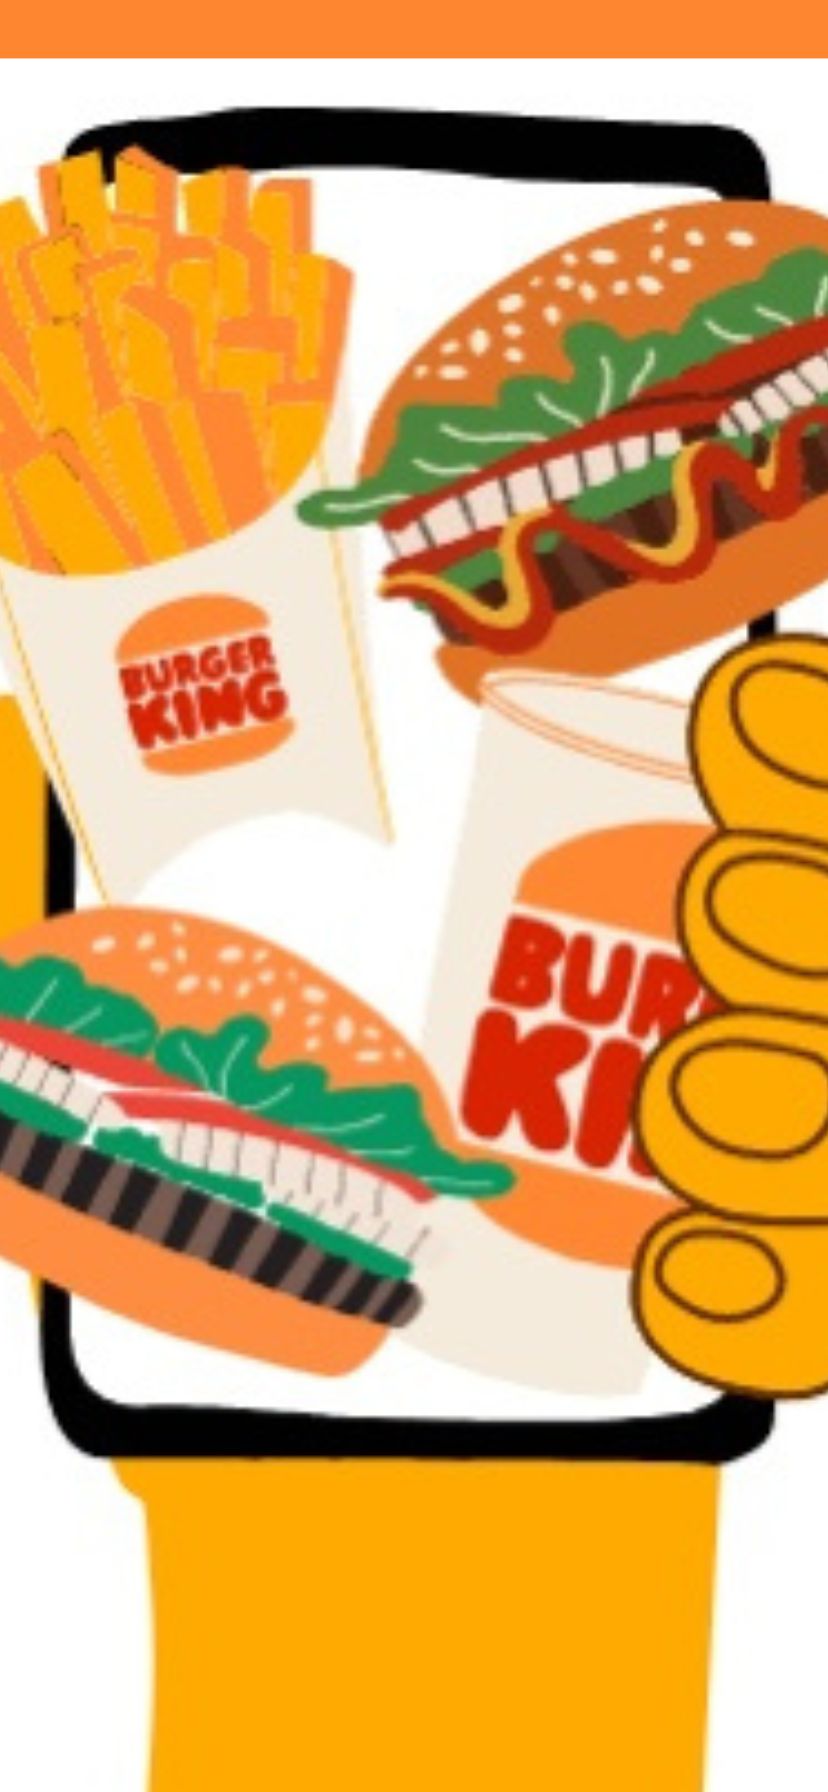 Burger King BR on X: no Clube BK os aniversariantes do mês